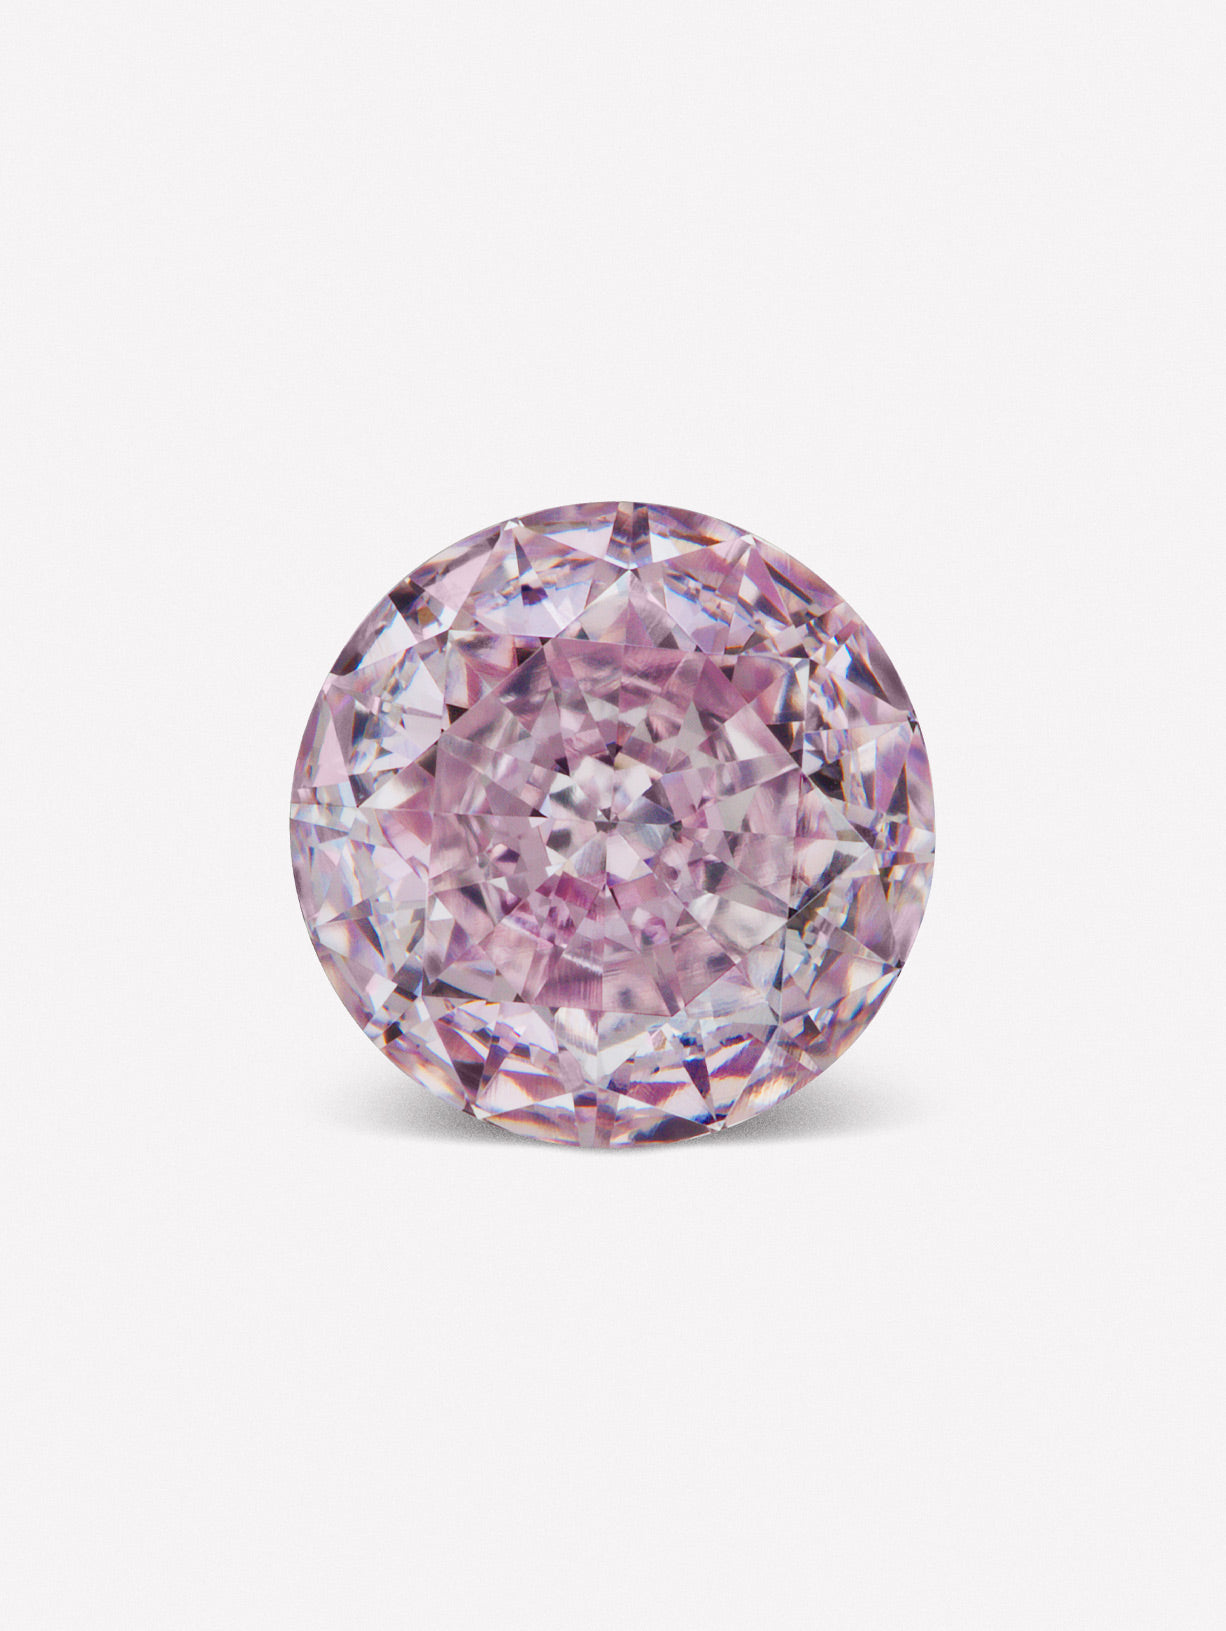 Round Brilliant Argyle Pink™ Diamond - Pink Diamonds, J FINE - J Fine, Pink Diamond - Pink Diamond Jewelry, rpund-brilliant-fancy-purple-pink-vvs1-gia-5191555779-argyle-pink-7pp - Argyle Pi